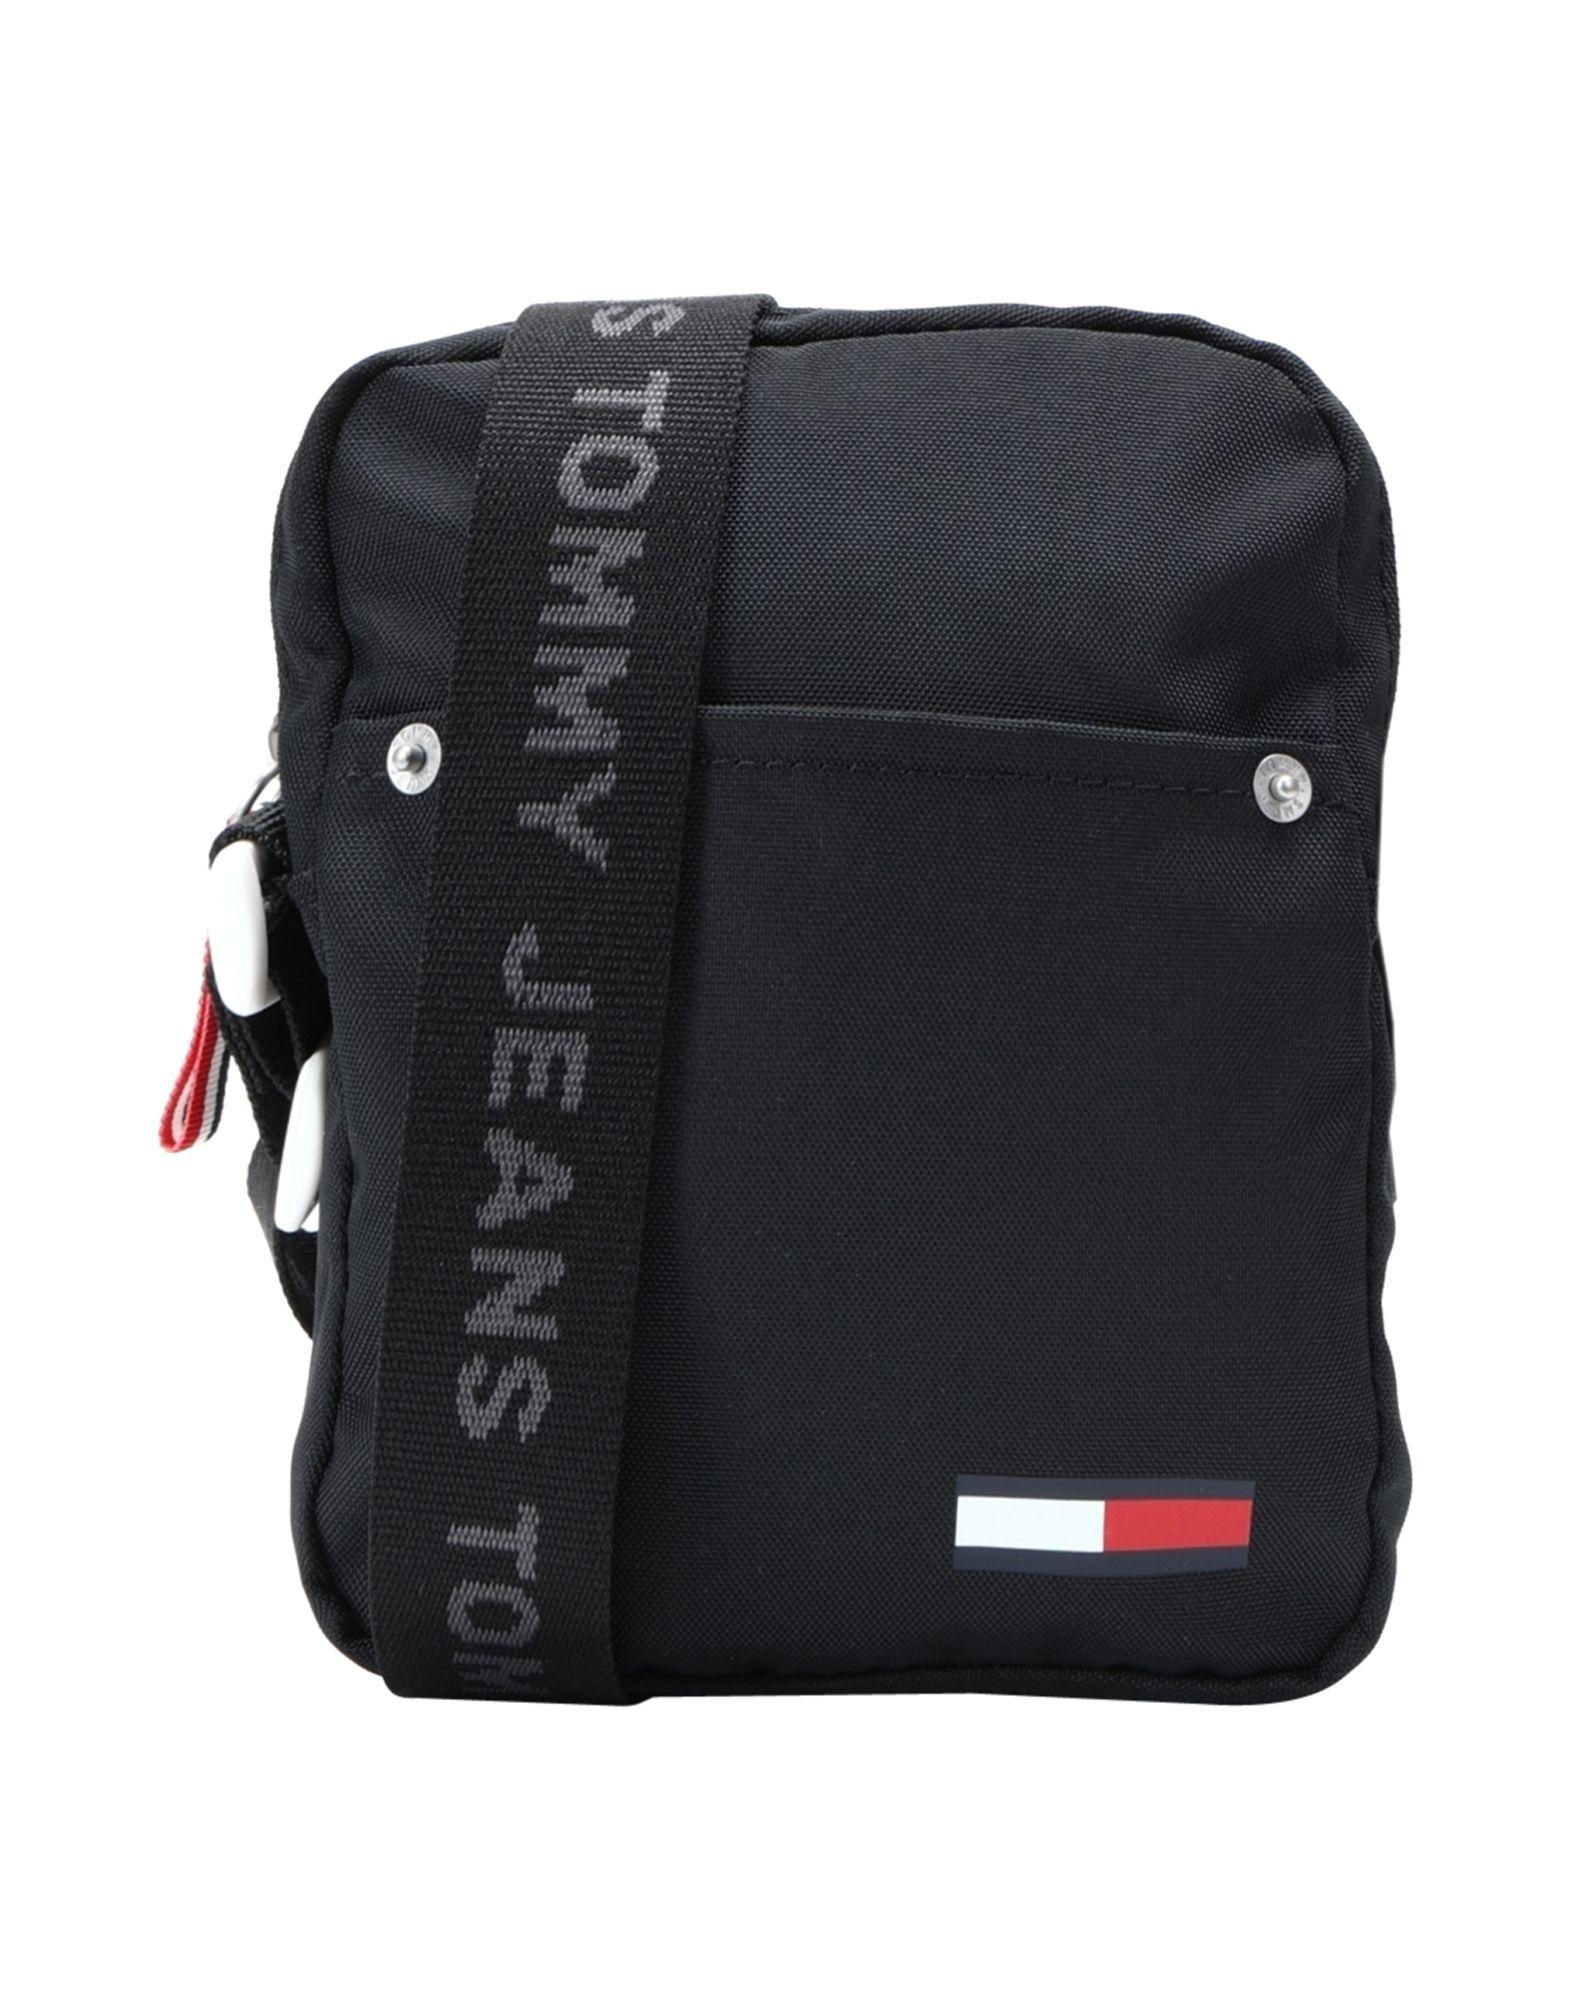 Tommy Hilfiger Canvas Cross-body Bag in Black for Men - Lyst